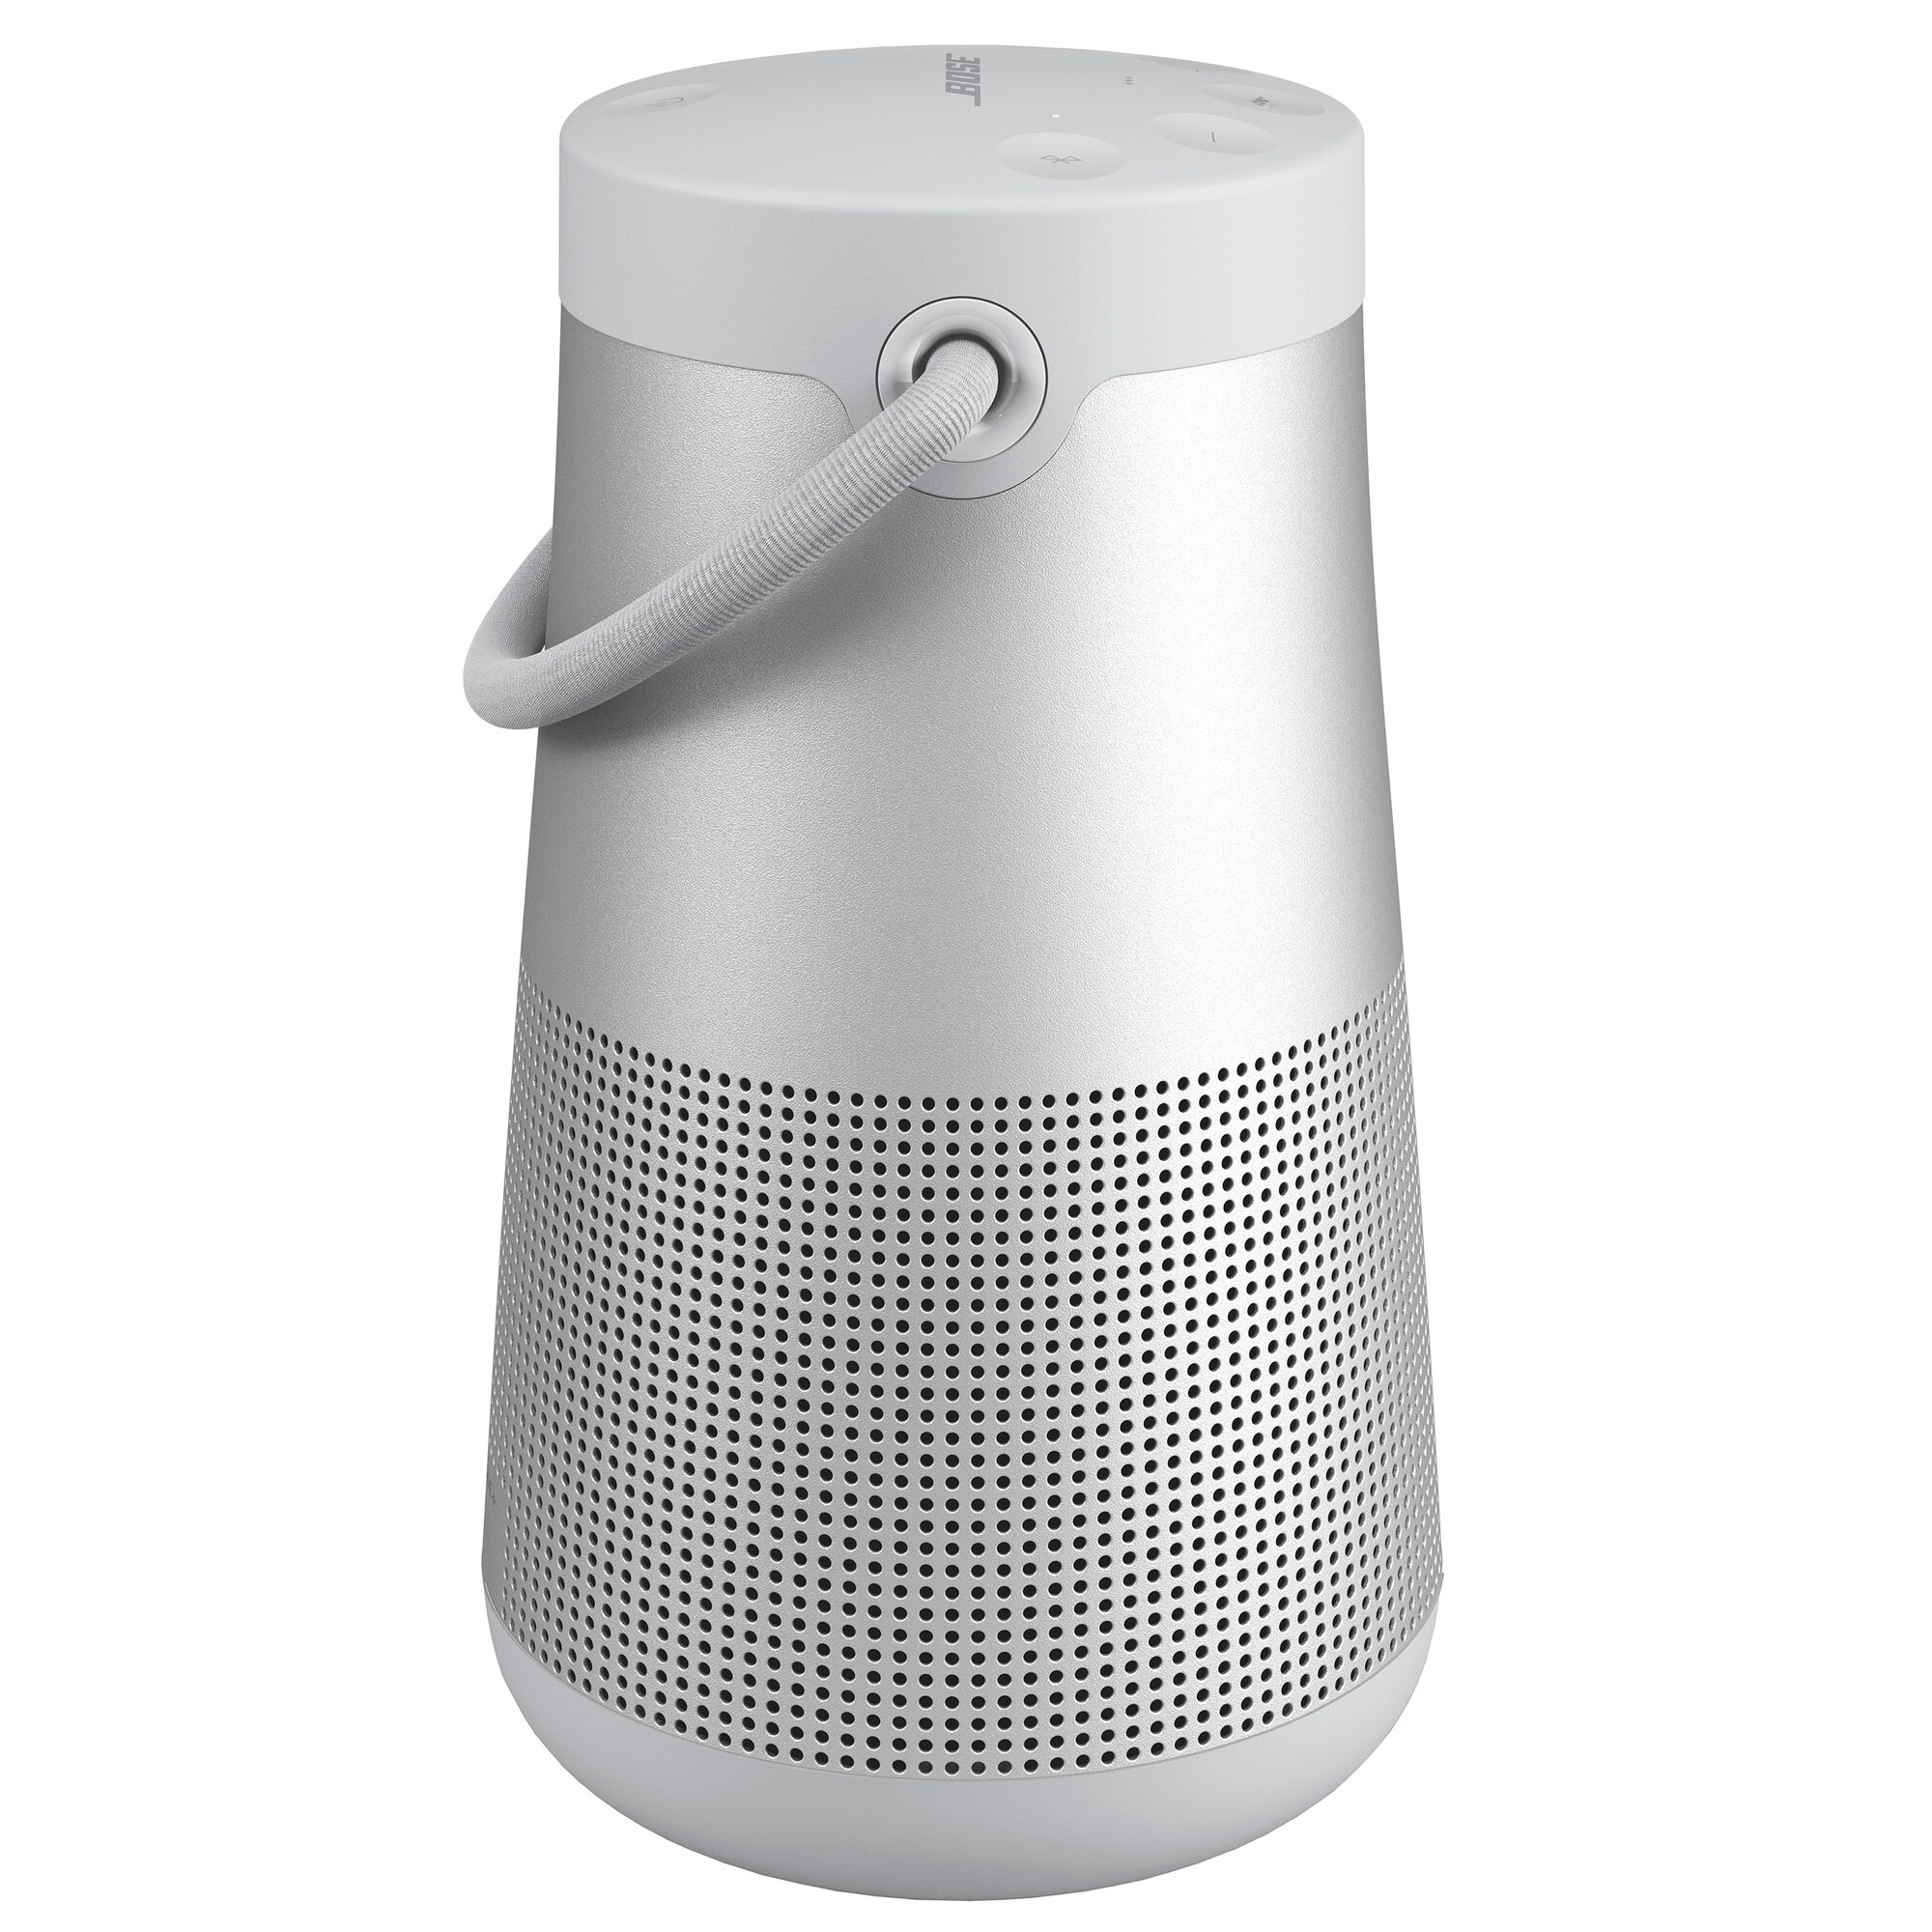 Bose SoundLink Revolve Plus trådlös högtalare (grå) - Elgiganten